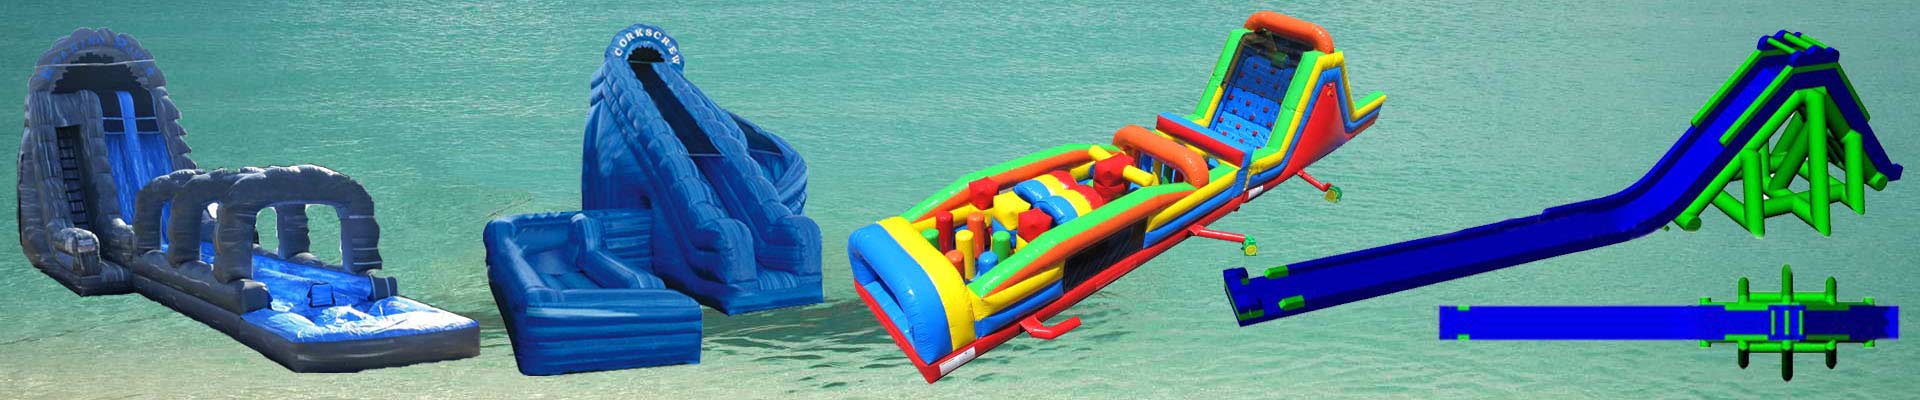 Kids inflatable water slide